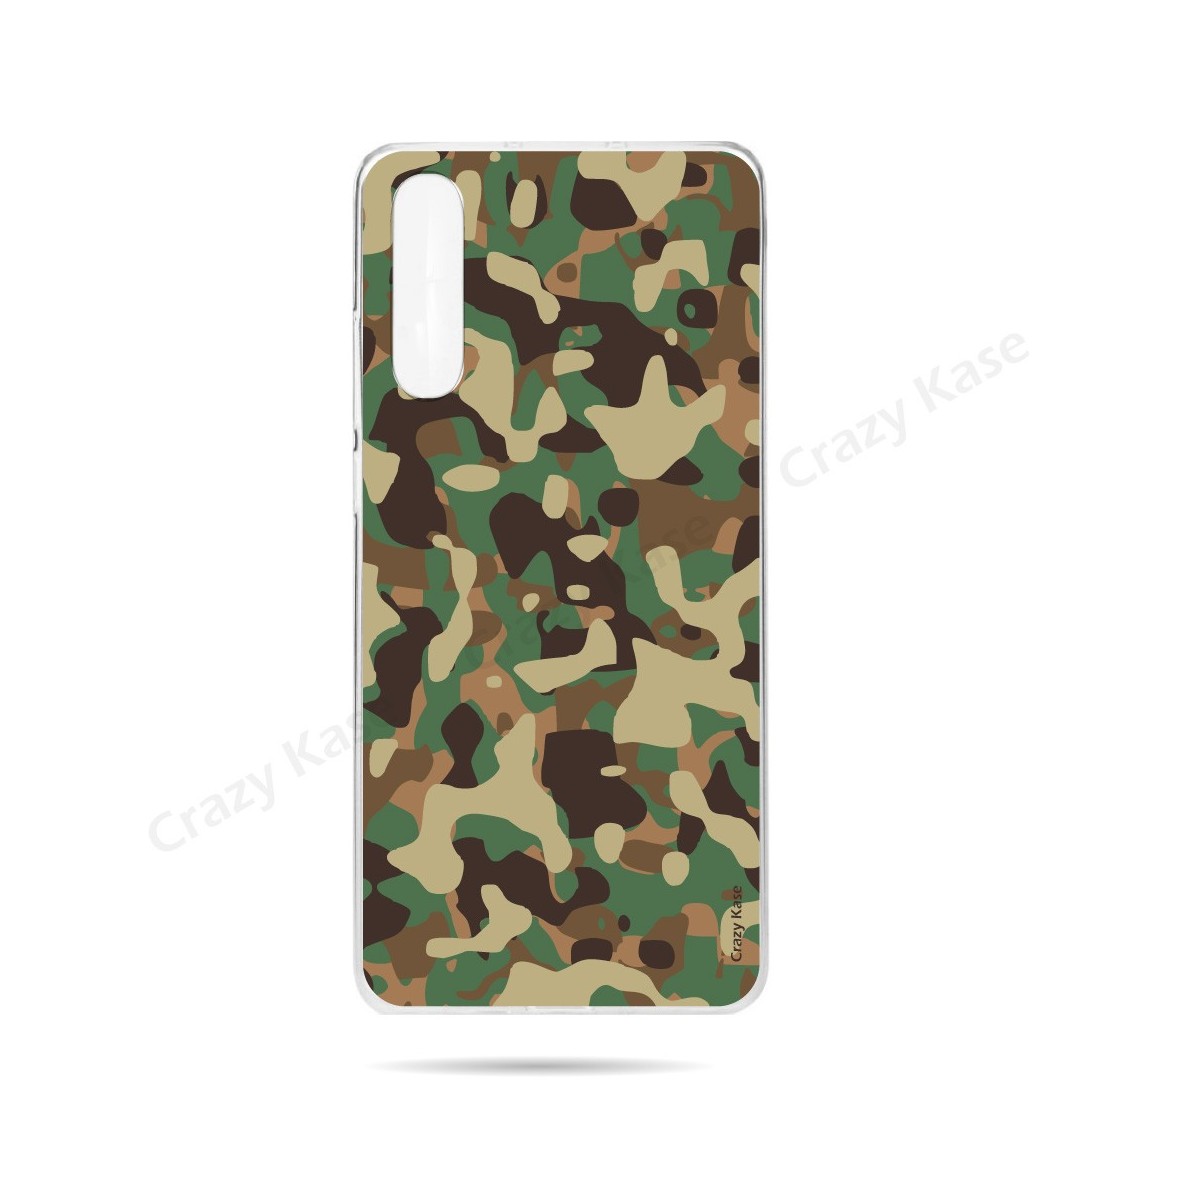 Coque compatible Galaxy A50 souple Camouflage militaire - Crazy Kase